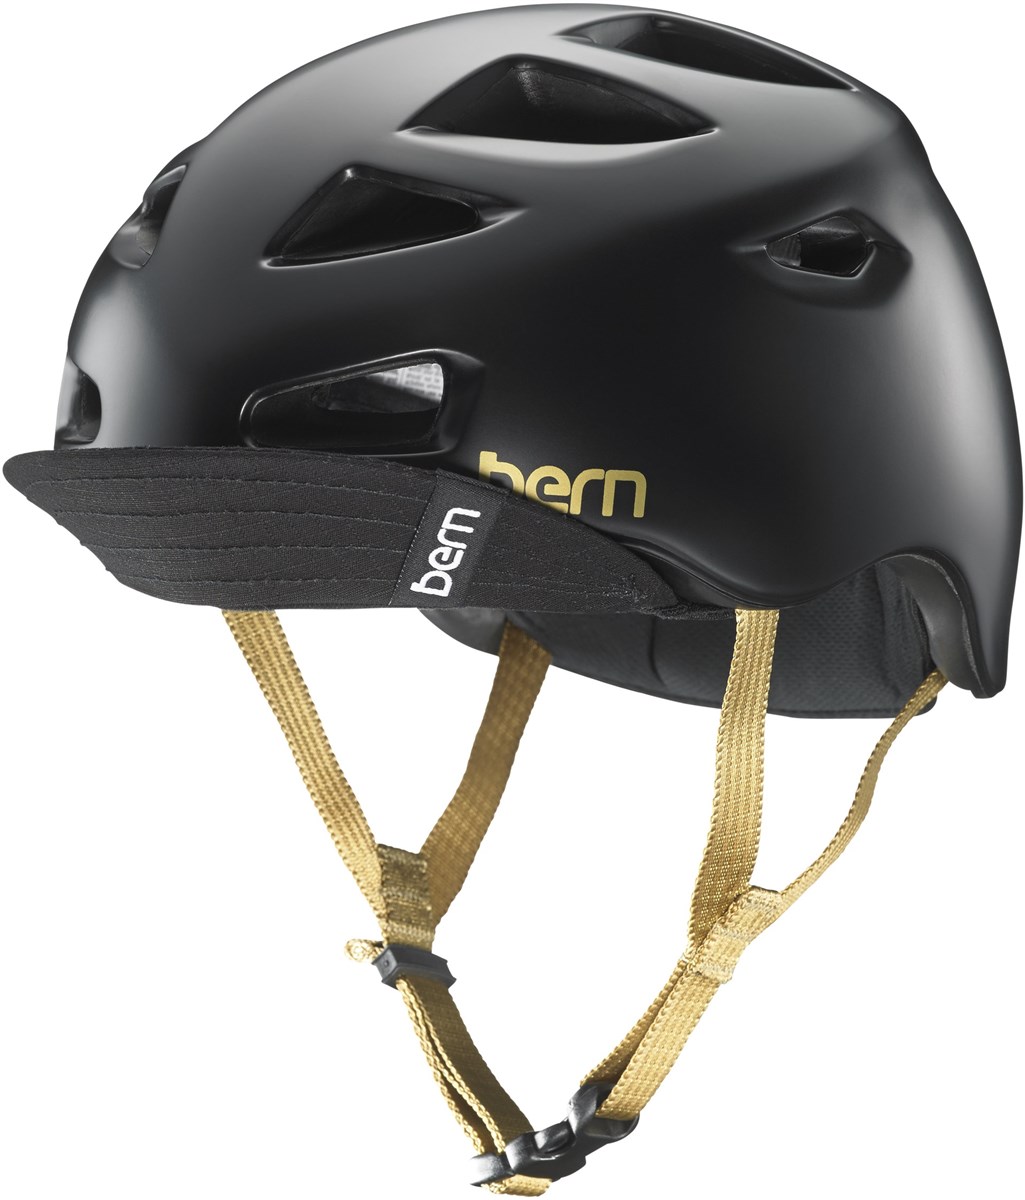 Bern Melrose Womens Helmet